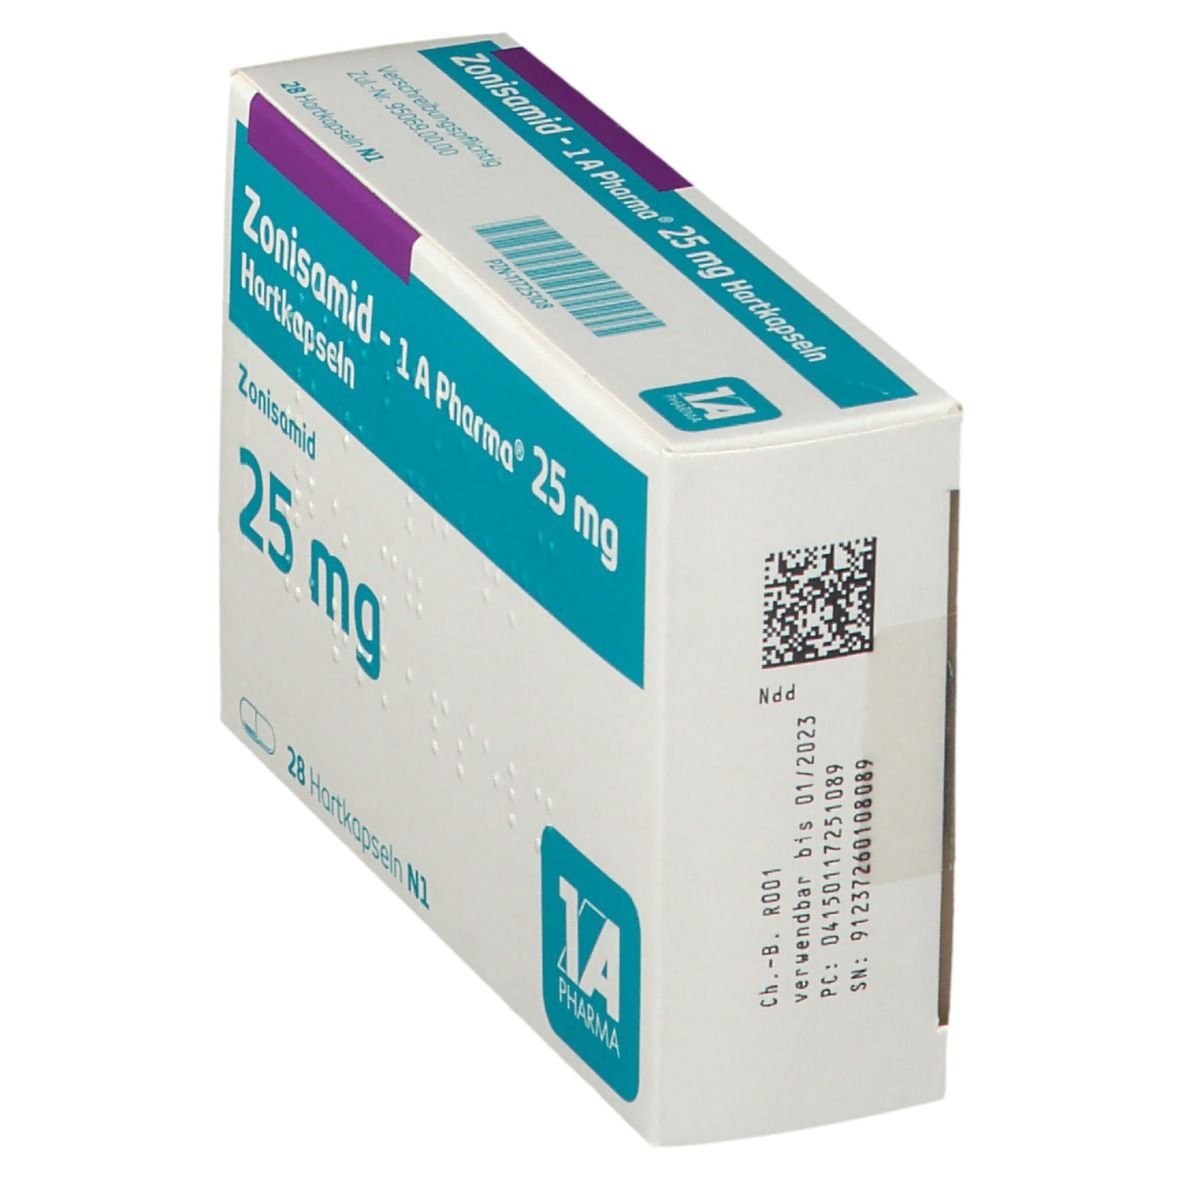 Zonisamid - 1 A Pharma® 25 mg